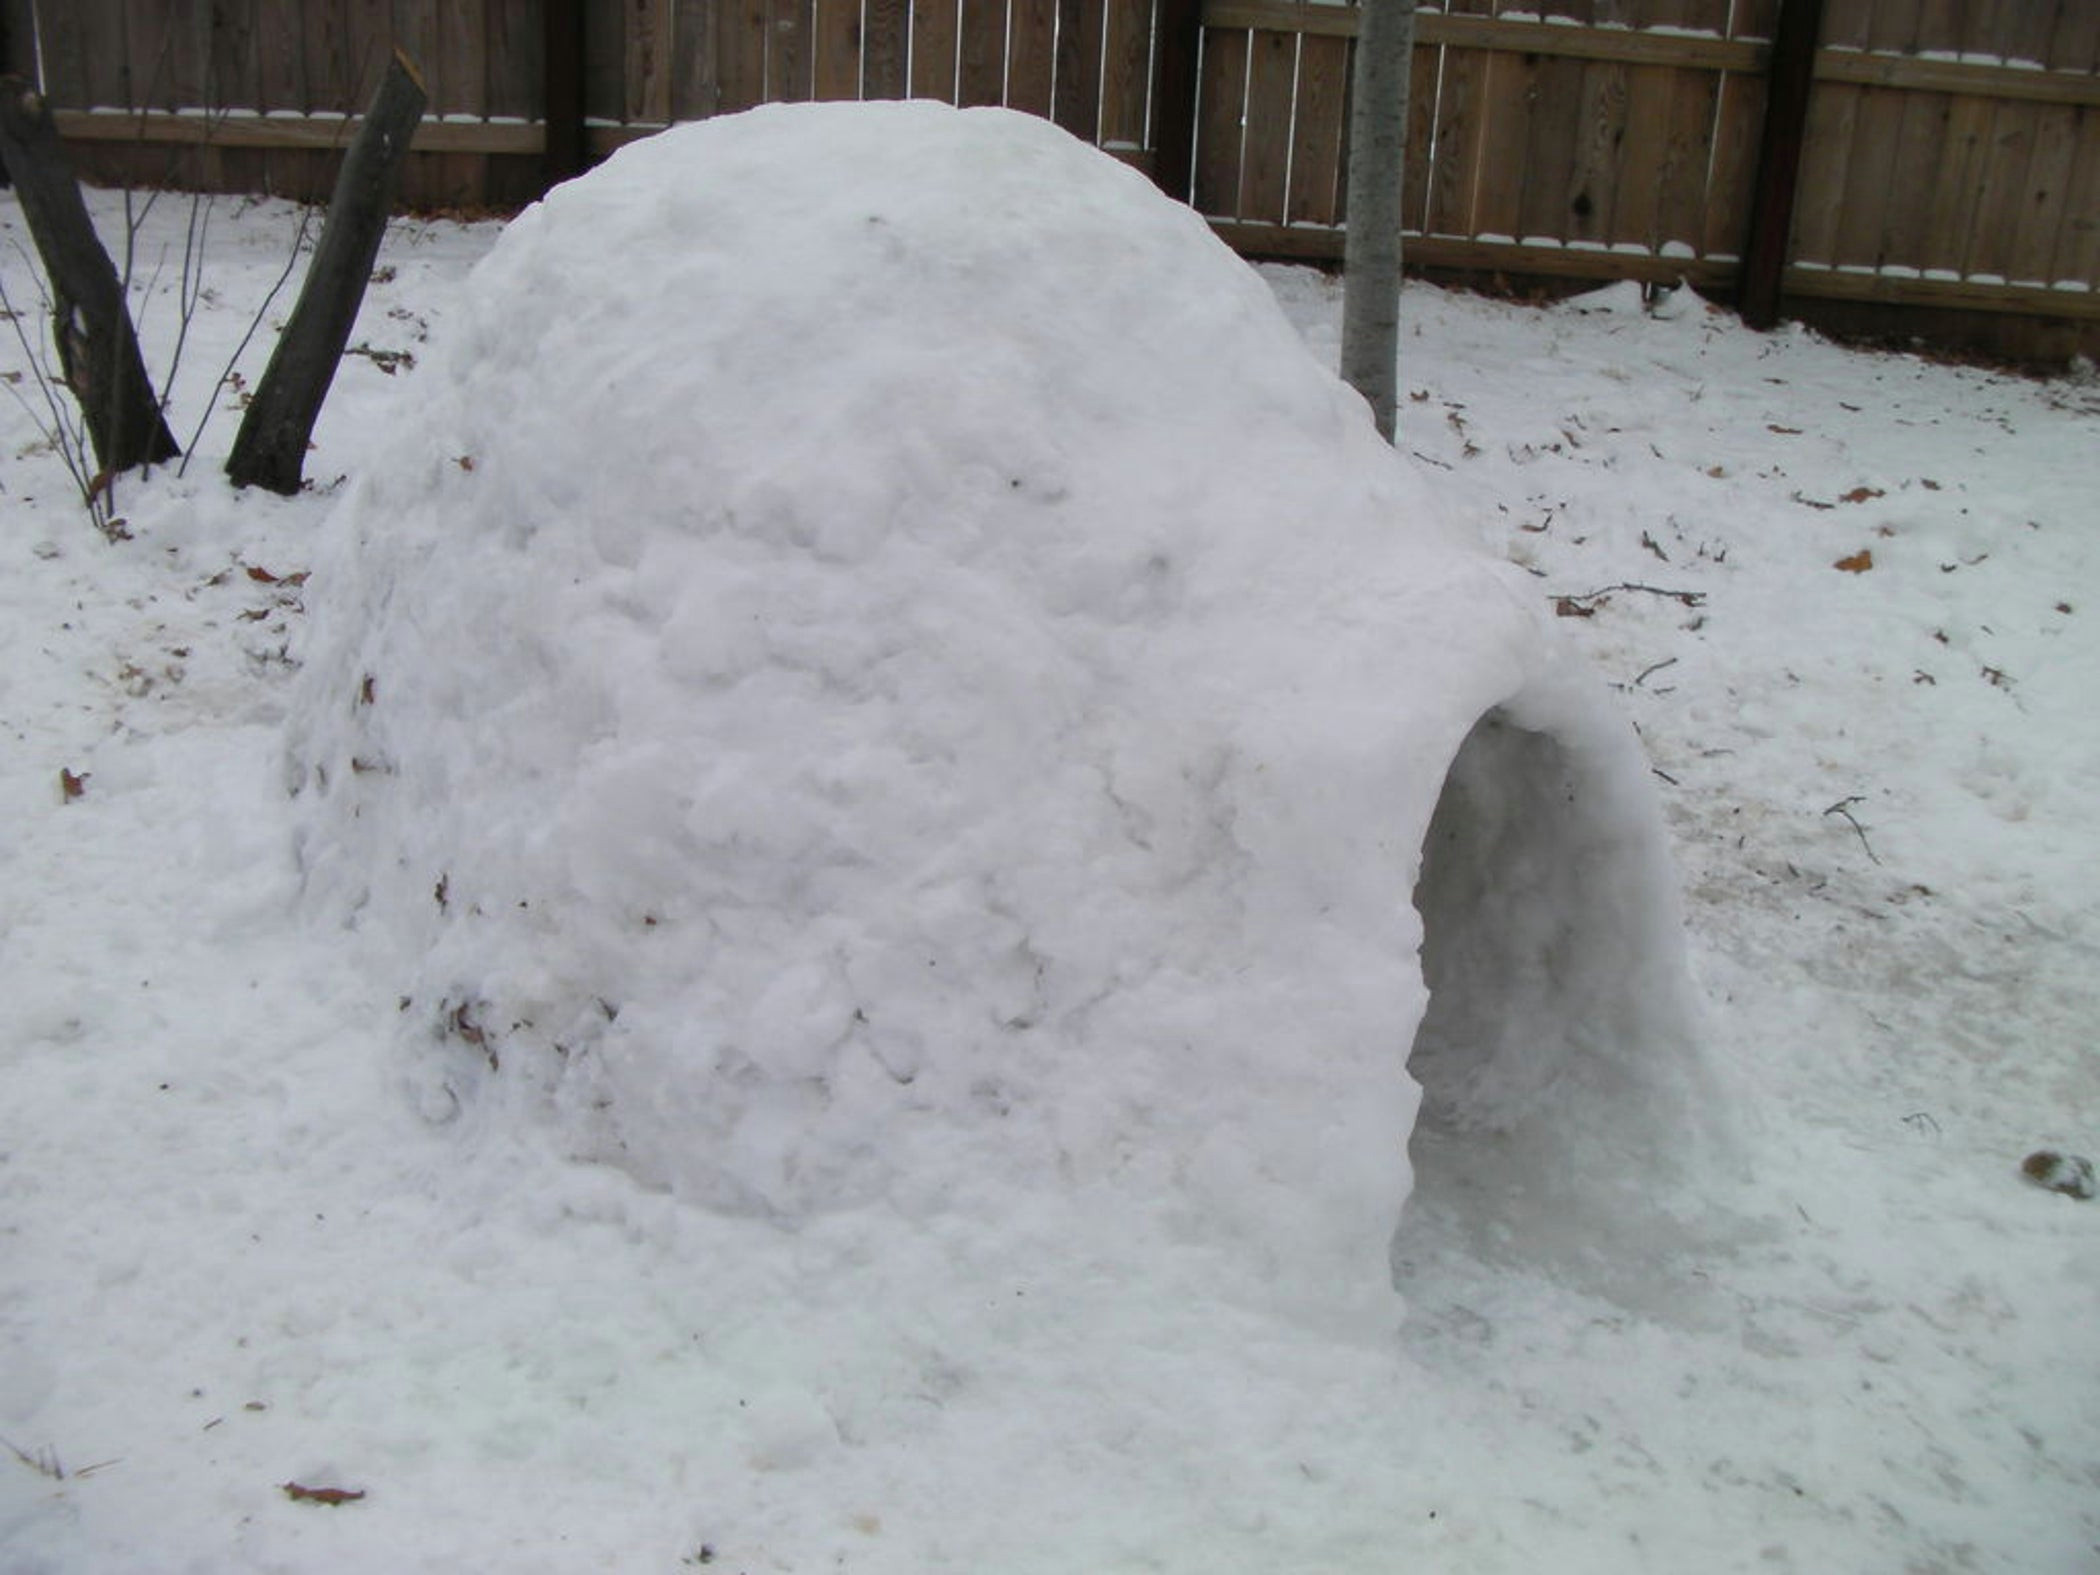 How to Draw An Igloo Easy How to Make A Backyard Igloo with Powdery Snow 5 Steps